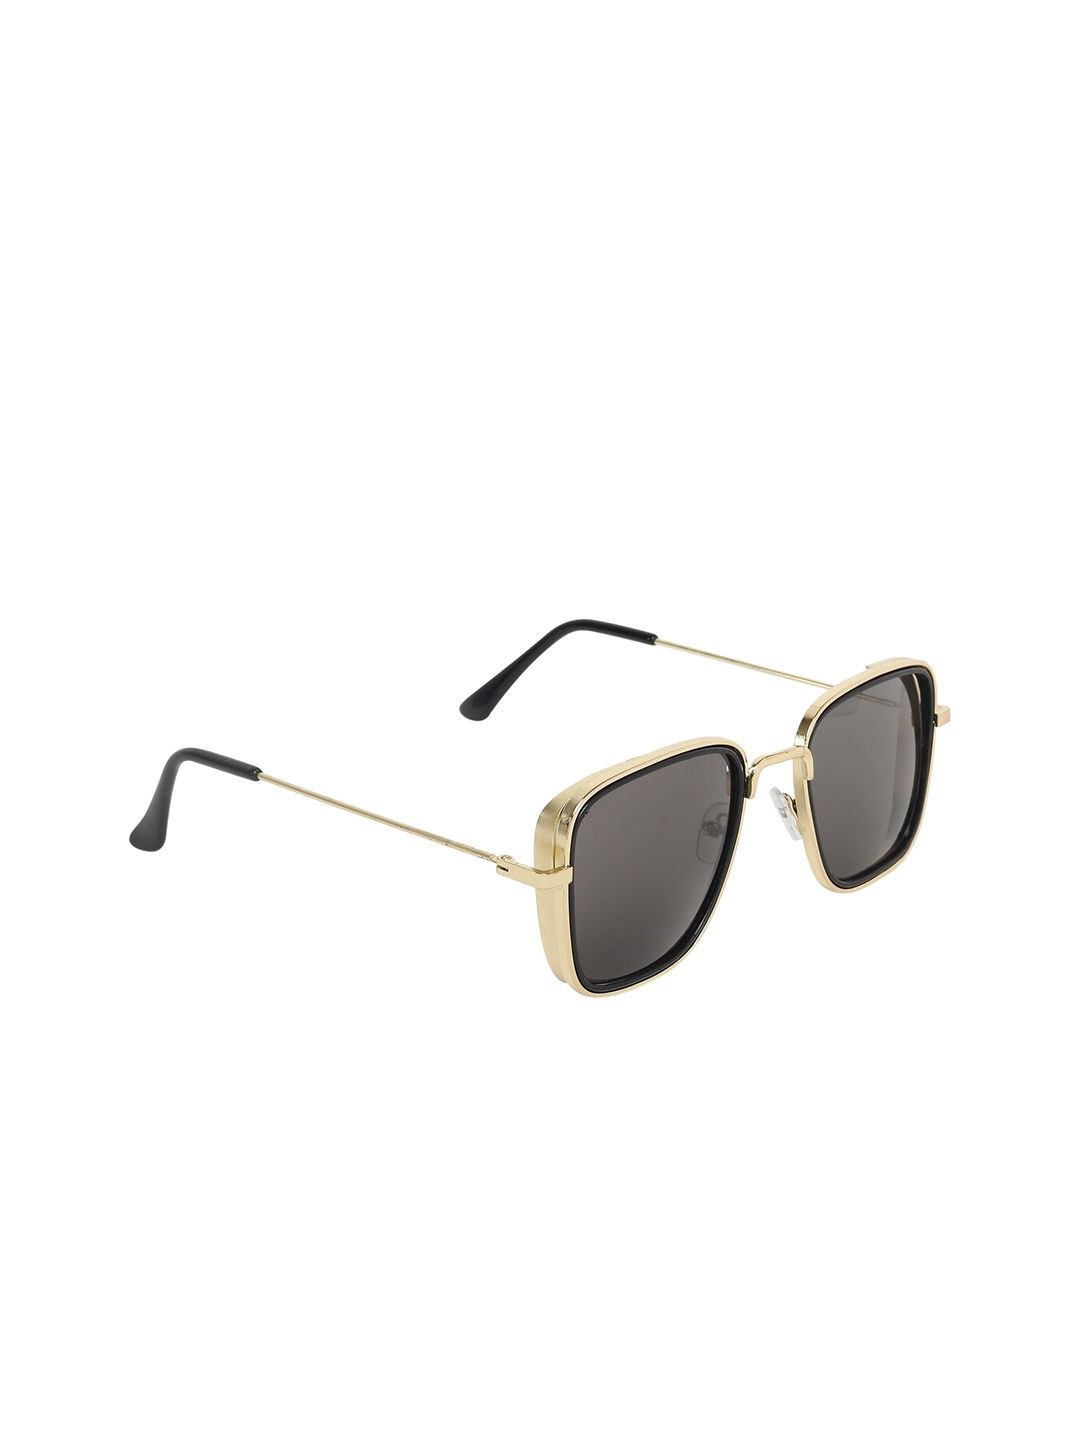 CRIBA Unisex Square UV Protected Sunglasses KABIR-HALF-GOLDBLK-001 Price in India